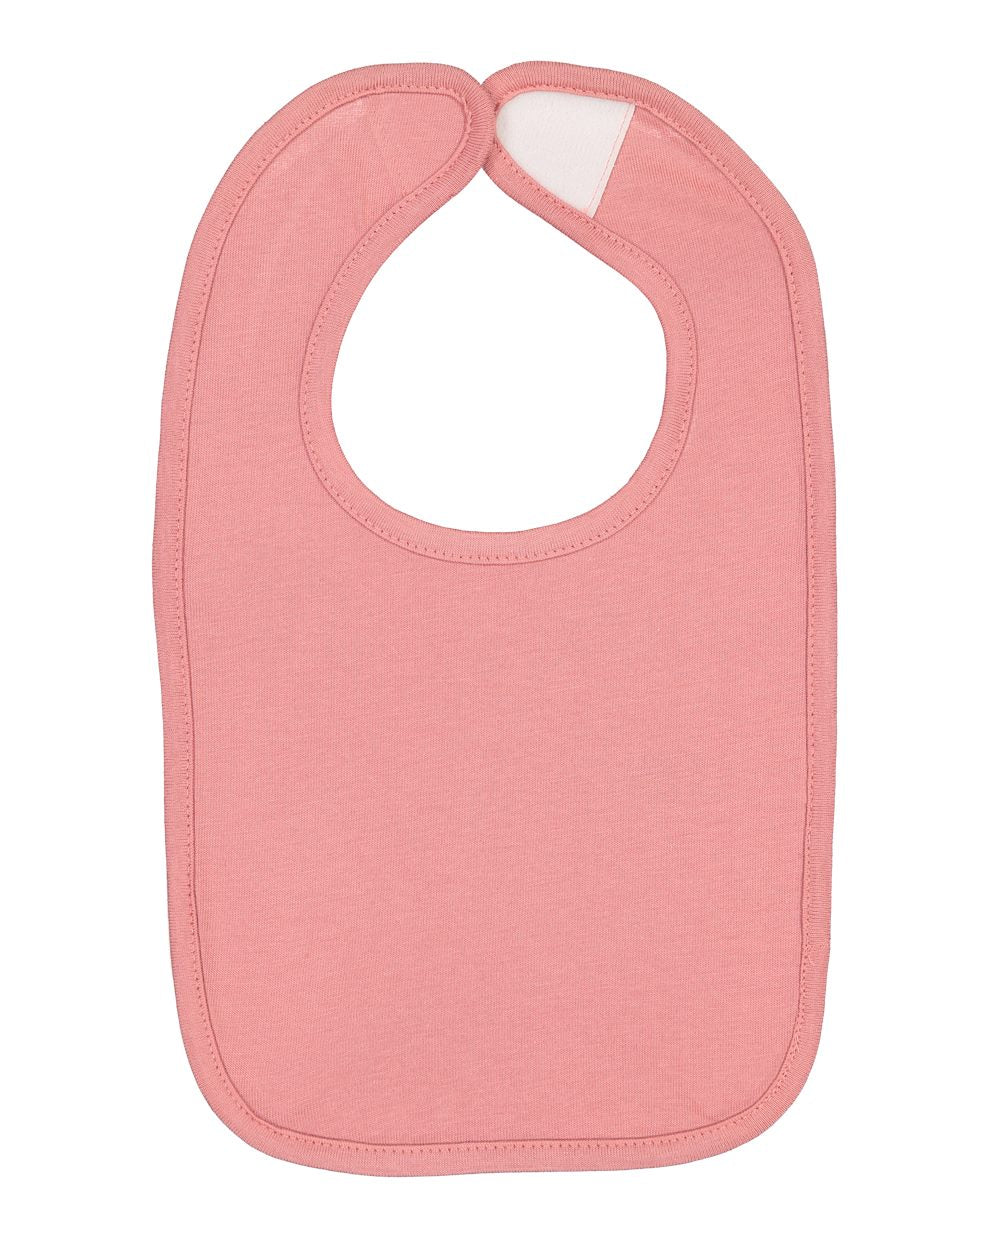 rabbit skins infant premium jersey bib mauvelous pink